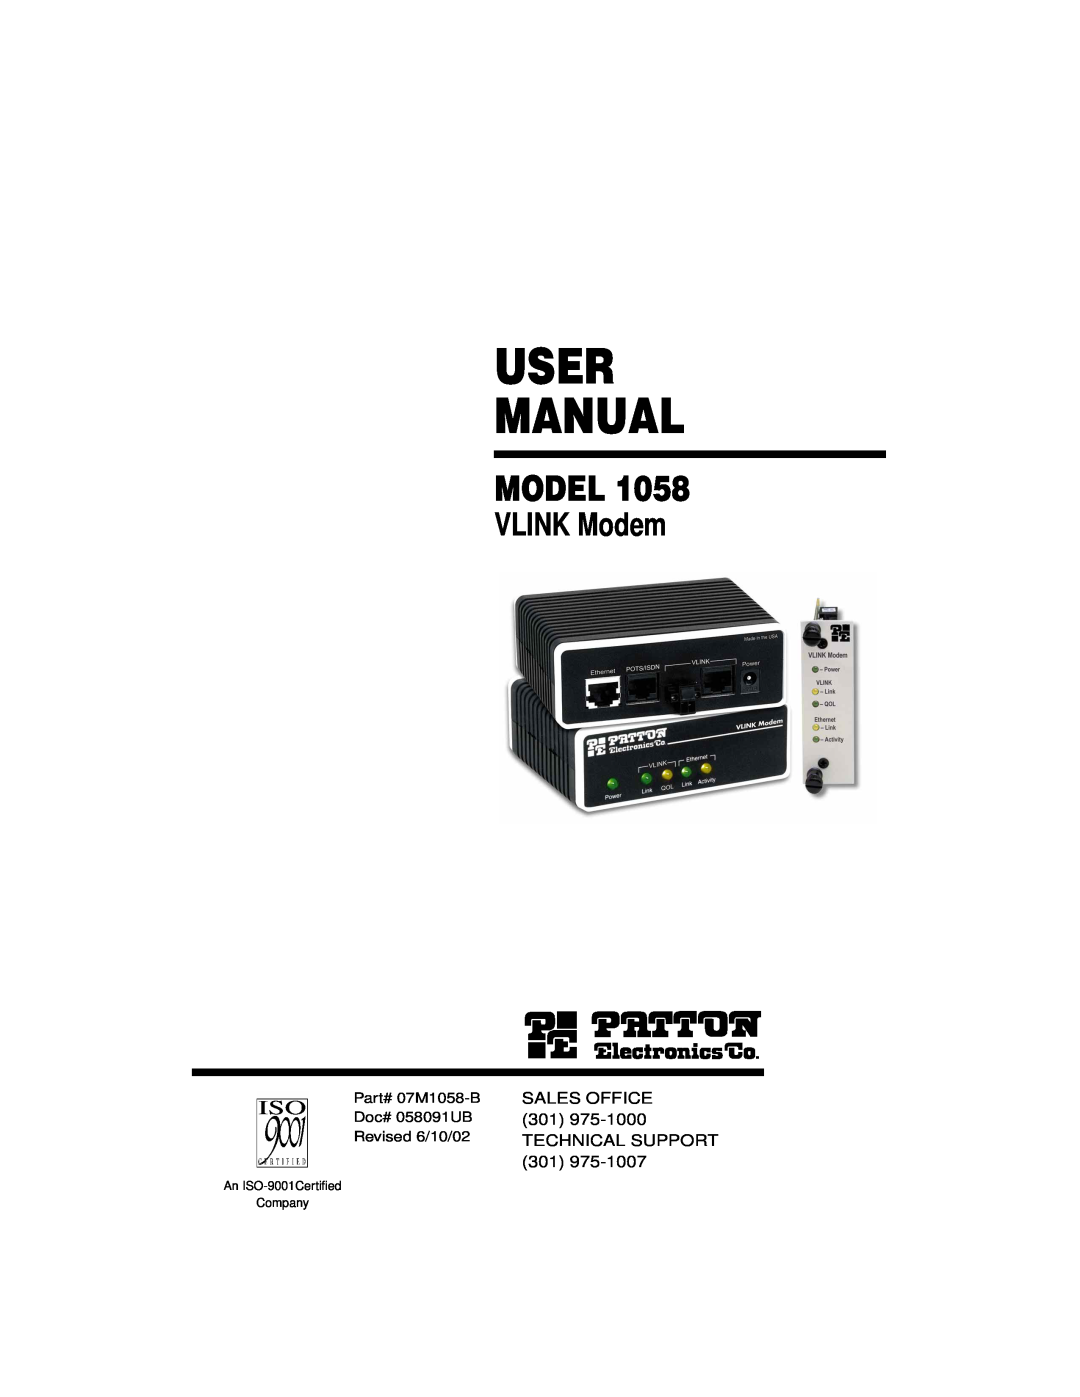 Patton electronic manual Product Model, Model 1058 12.5 Mbps VDSL Modem, Product Name, Product Manager, John Grant 